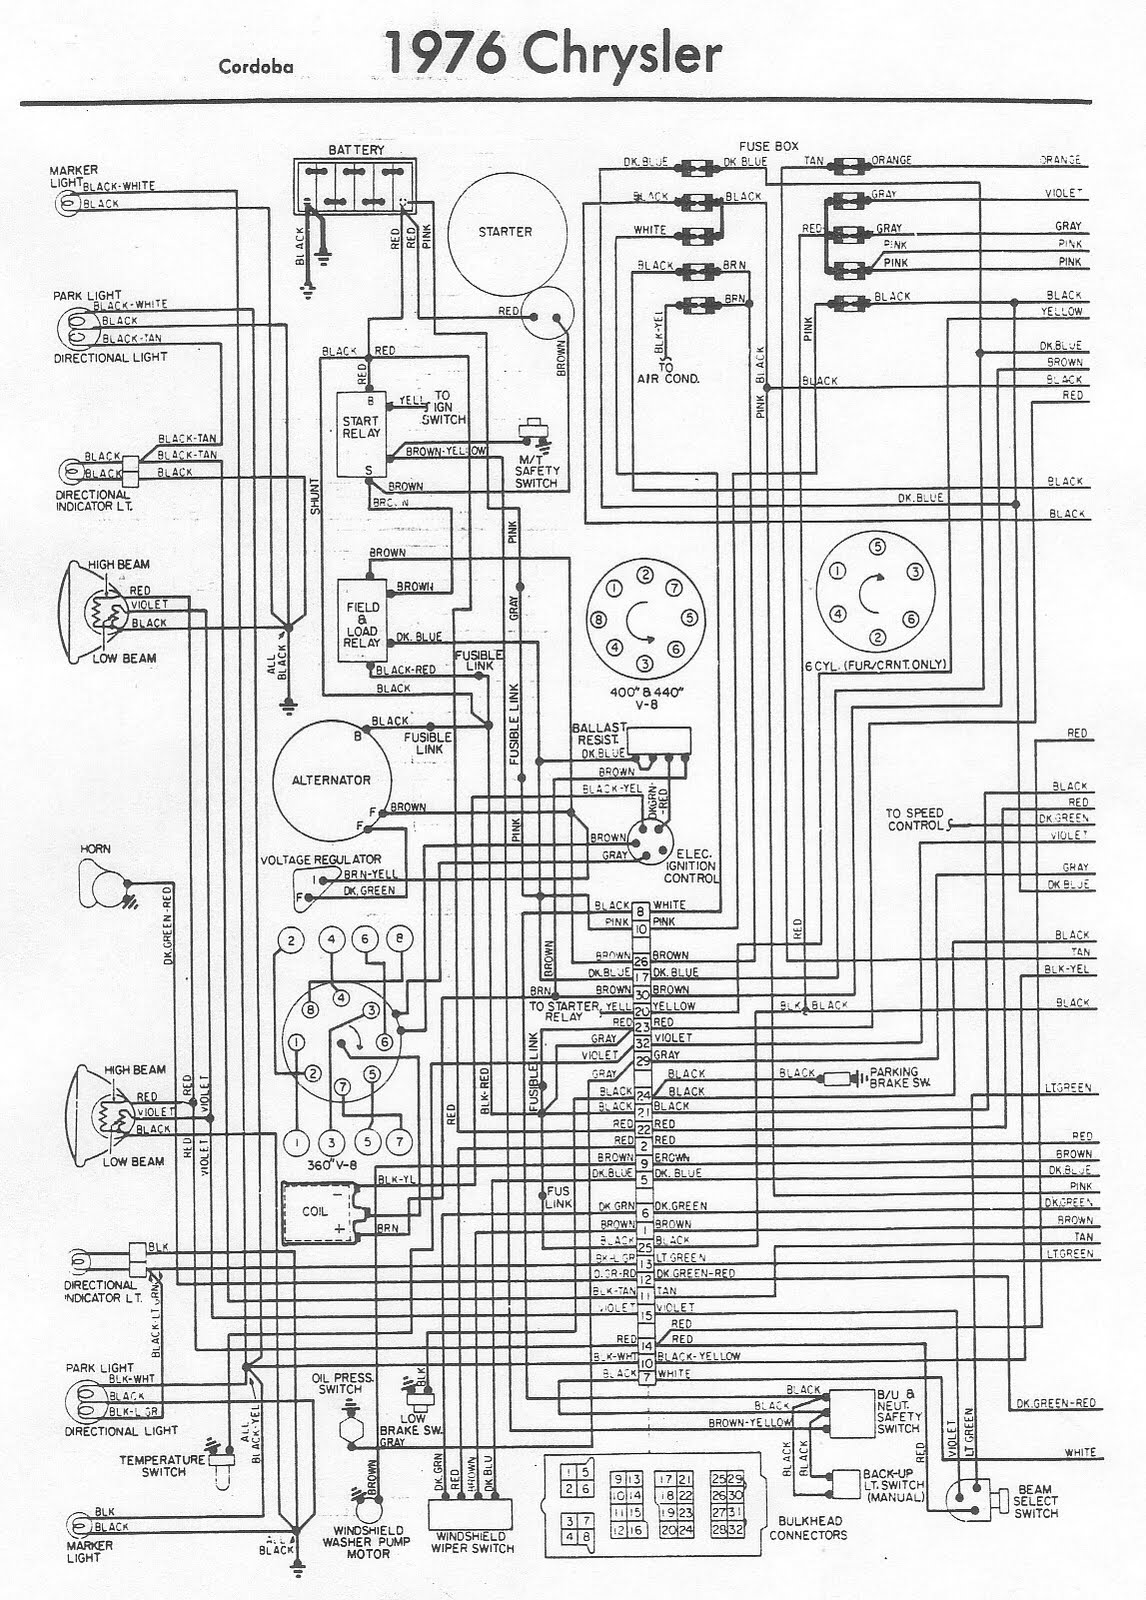 42909x60b wiring diagram